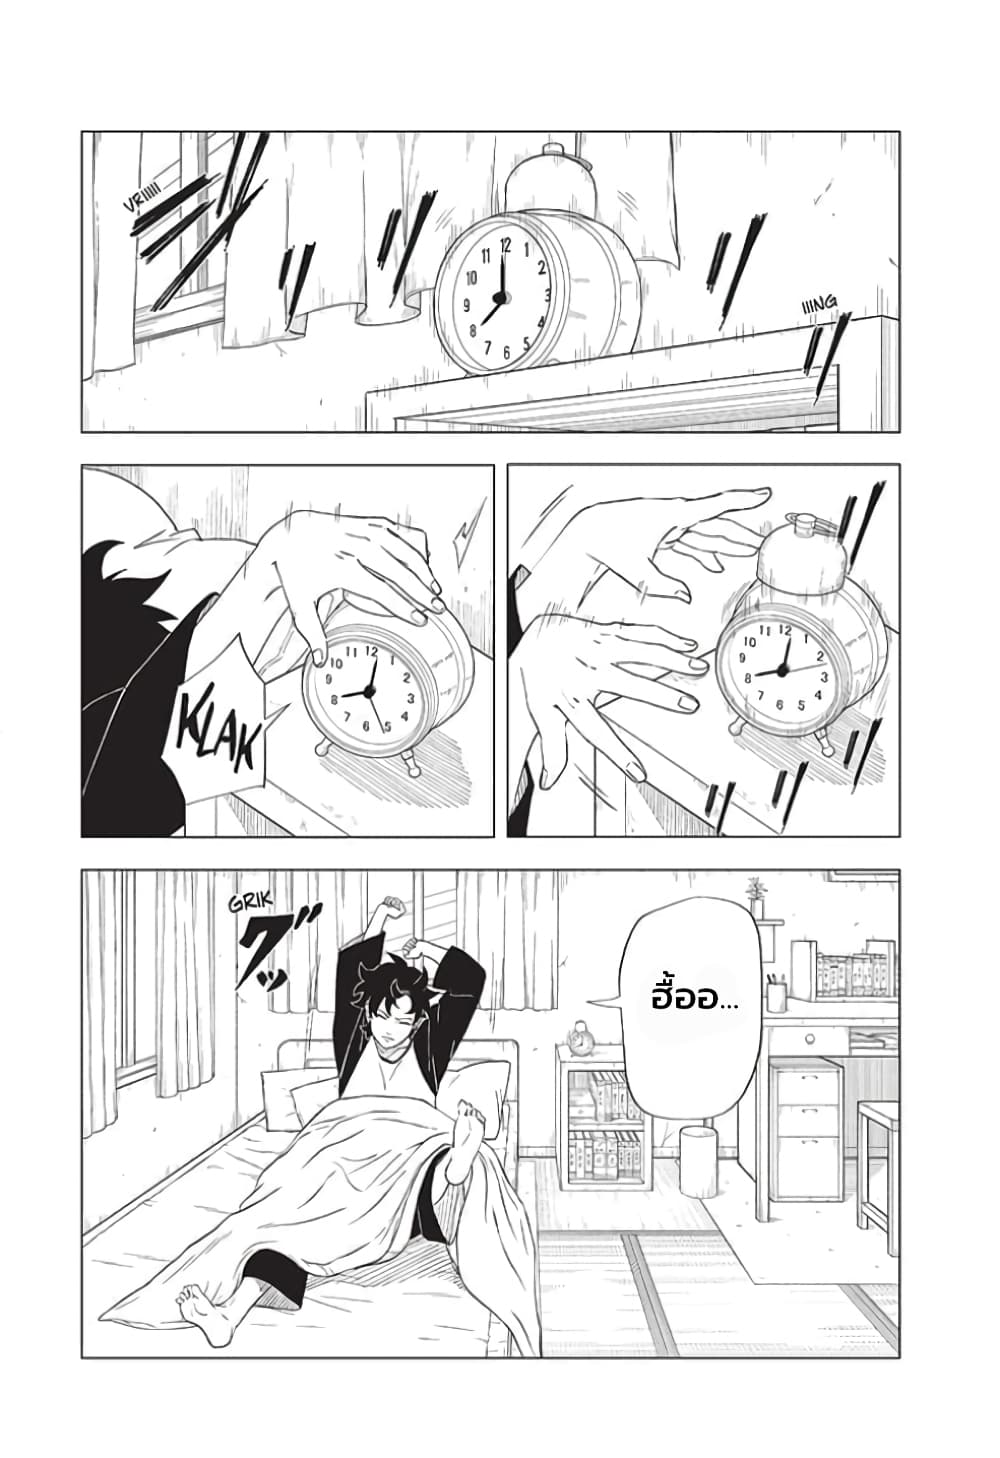 Naruto: Konoha's Story - The Steam Ninja Scrolls: The Manga 2-ภารกิจระดับ S